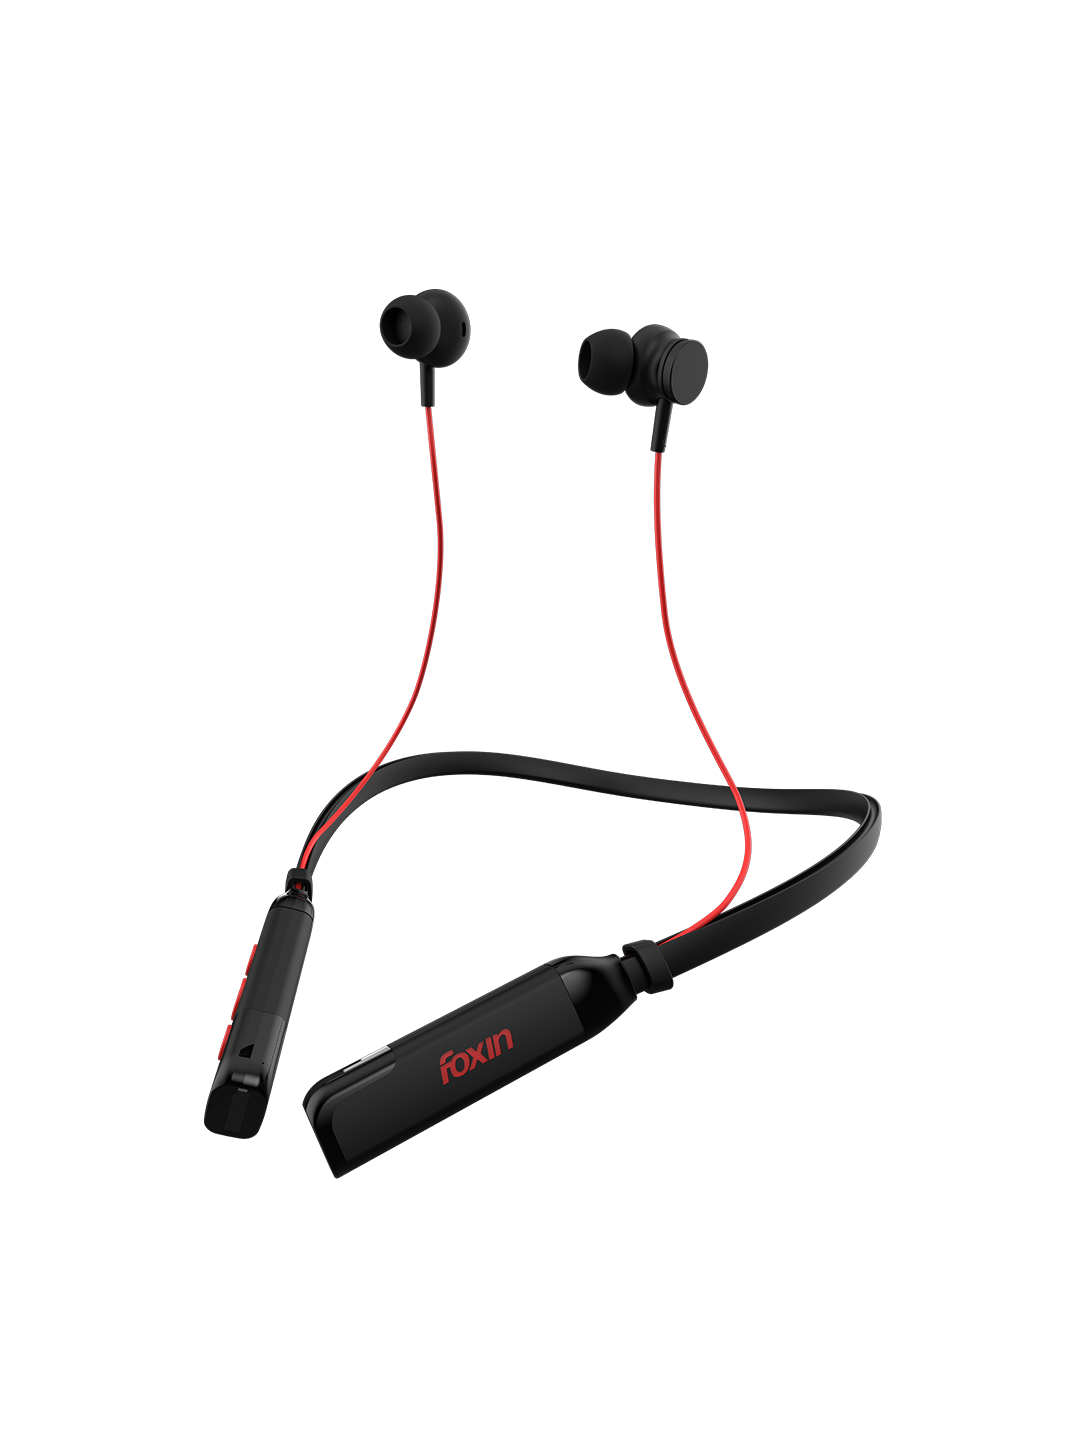 FoxBeat 111 Wireless Neckband /neckband earphones/Headsets/gaming headphone